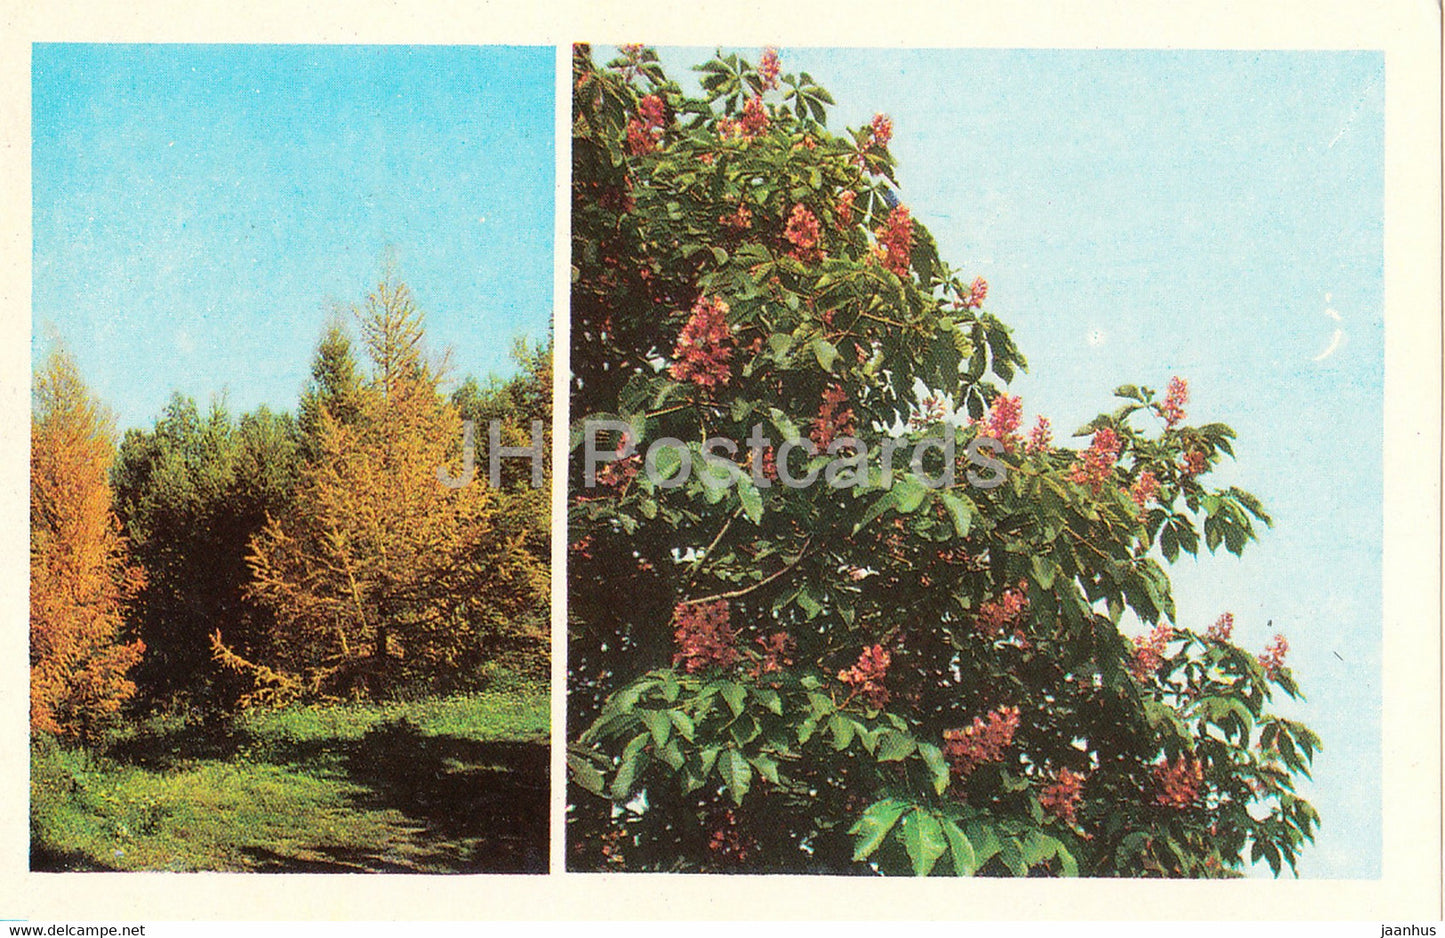 Central State Botanical Garden of Ukraine SSR - Siberian larch - Red horse-chestnut - 1978 - Ukraine USSR - unused - JH Postcards